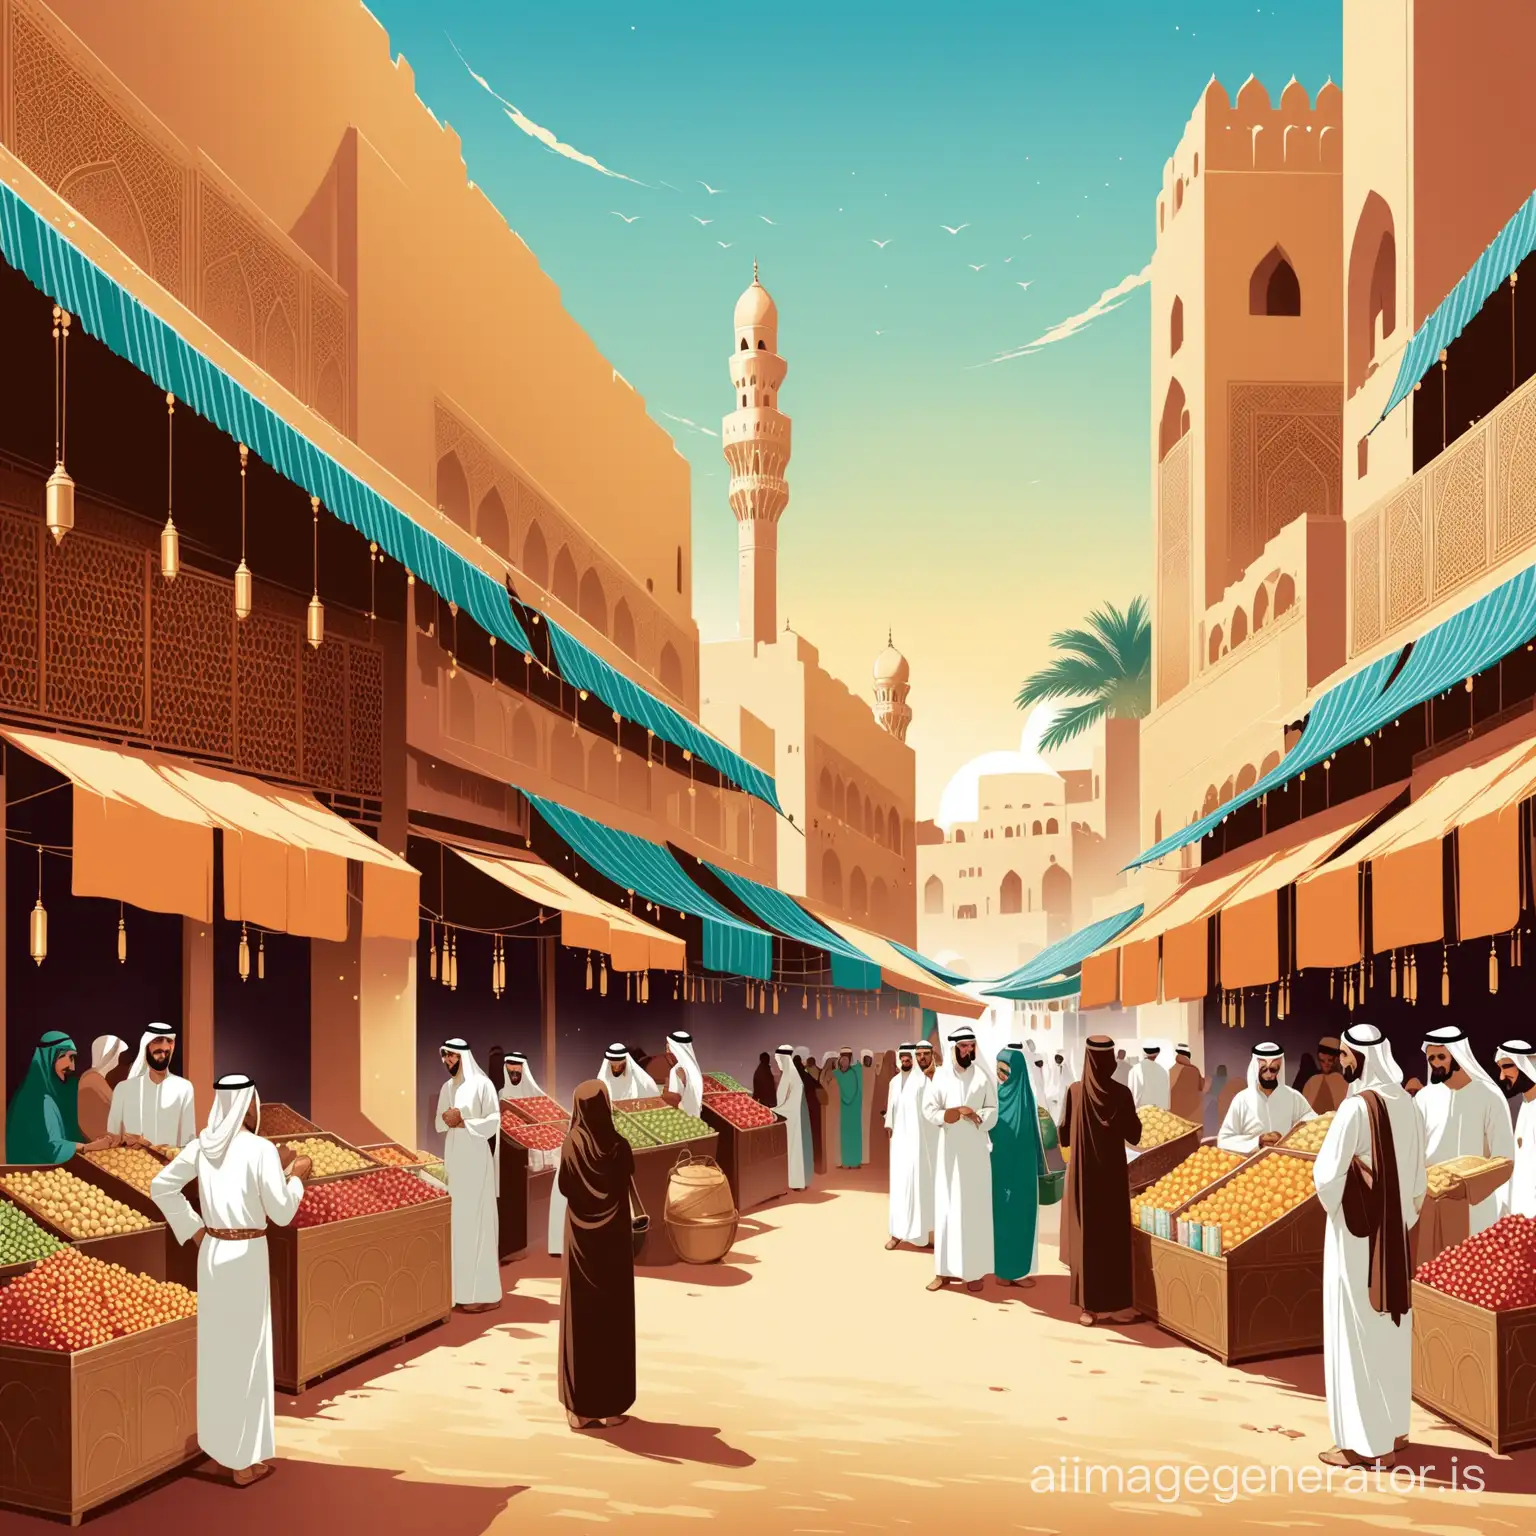 Vibrant-Arab-Market-Scene-in-Art-Deco-Style